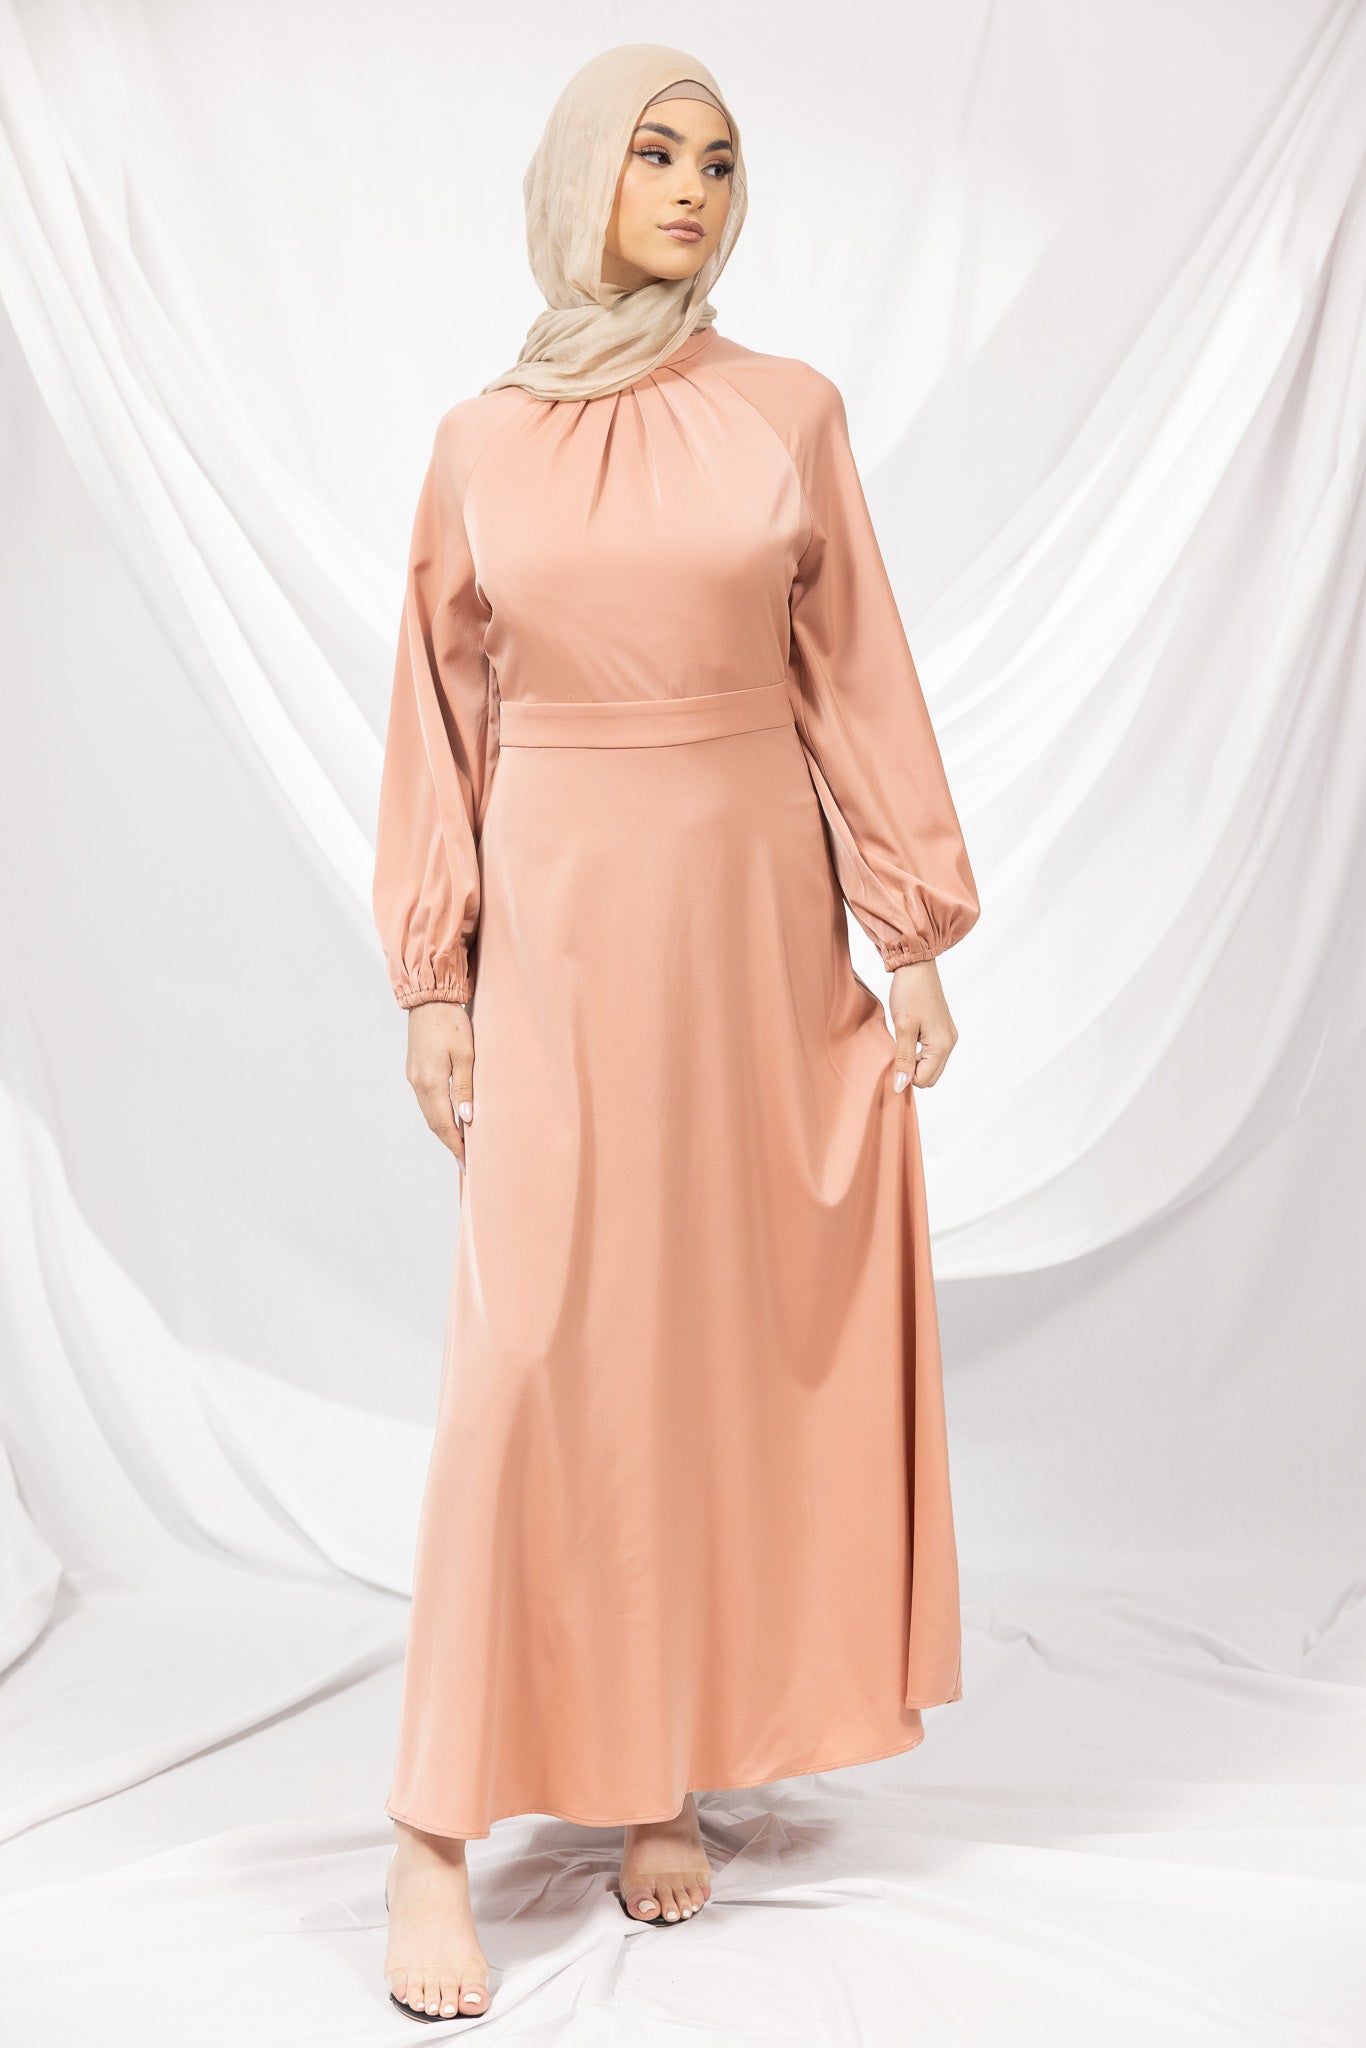 m8025Blush-dress-abaya